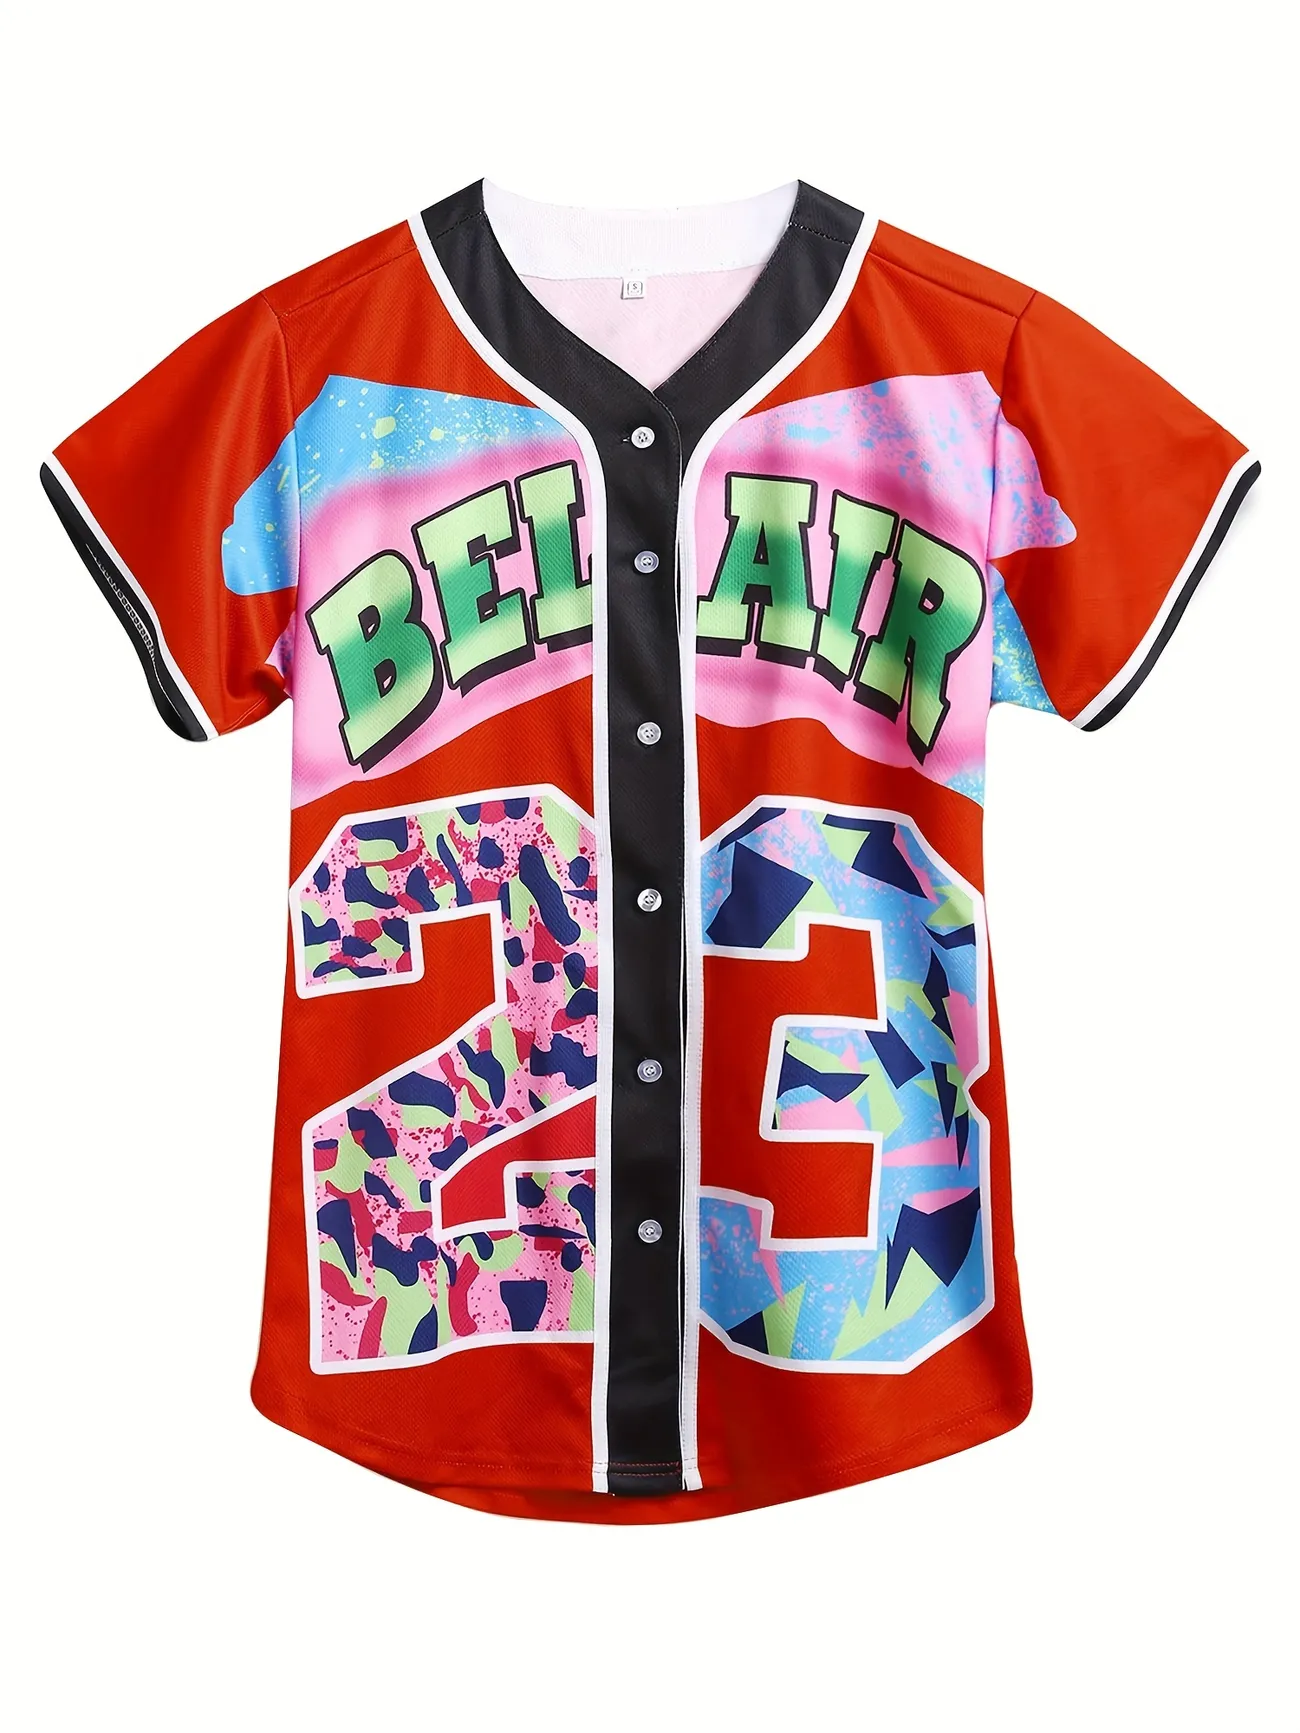 90s baseball jersey outfits